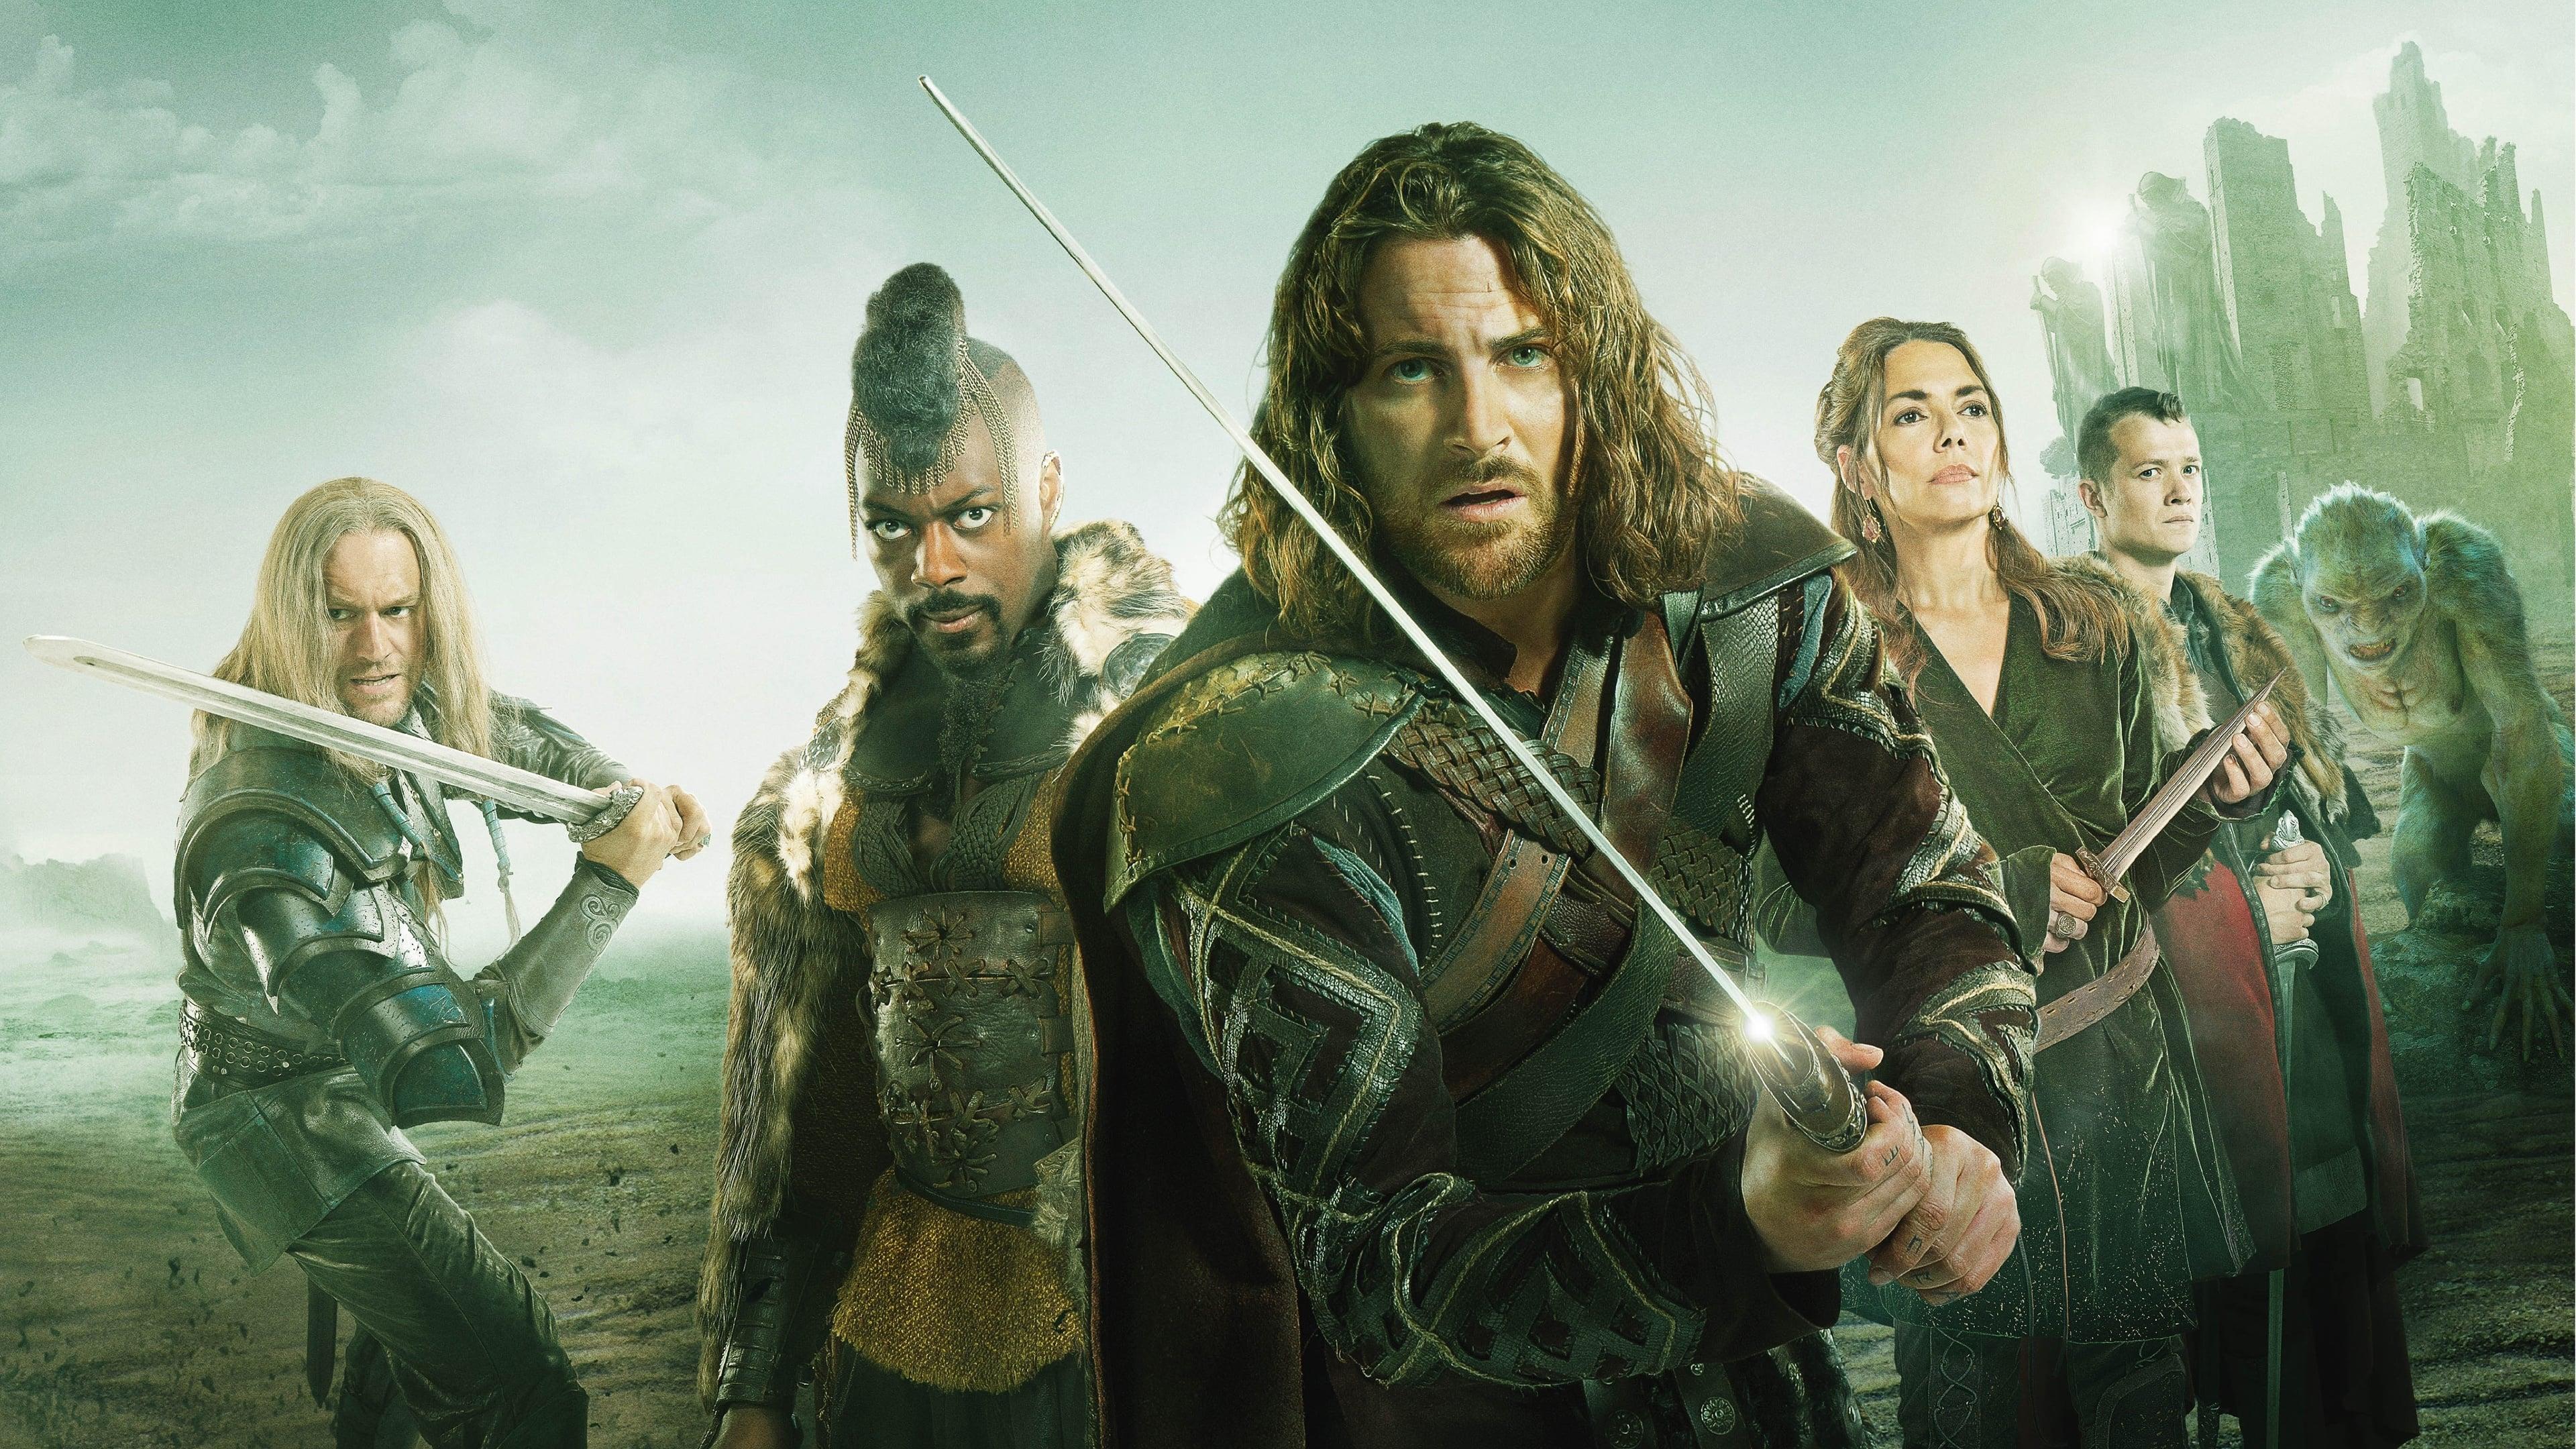 Beowulf: Return to the Shieldlands backdrop